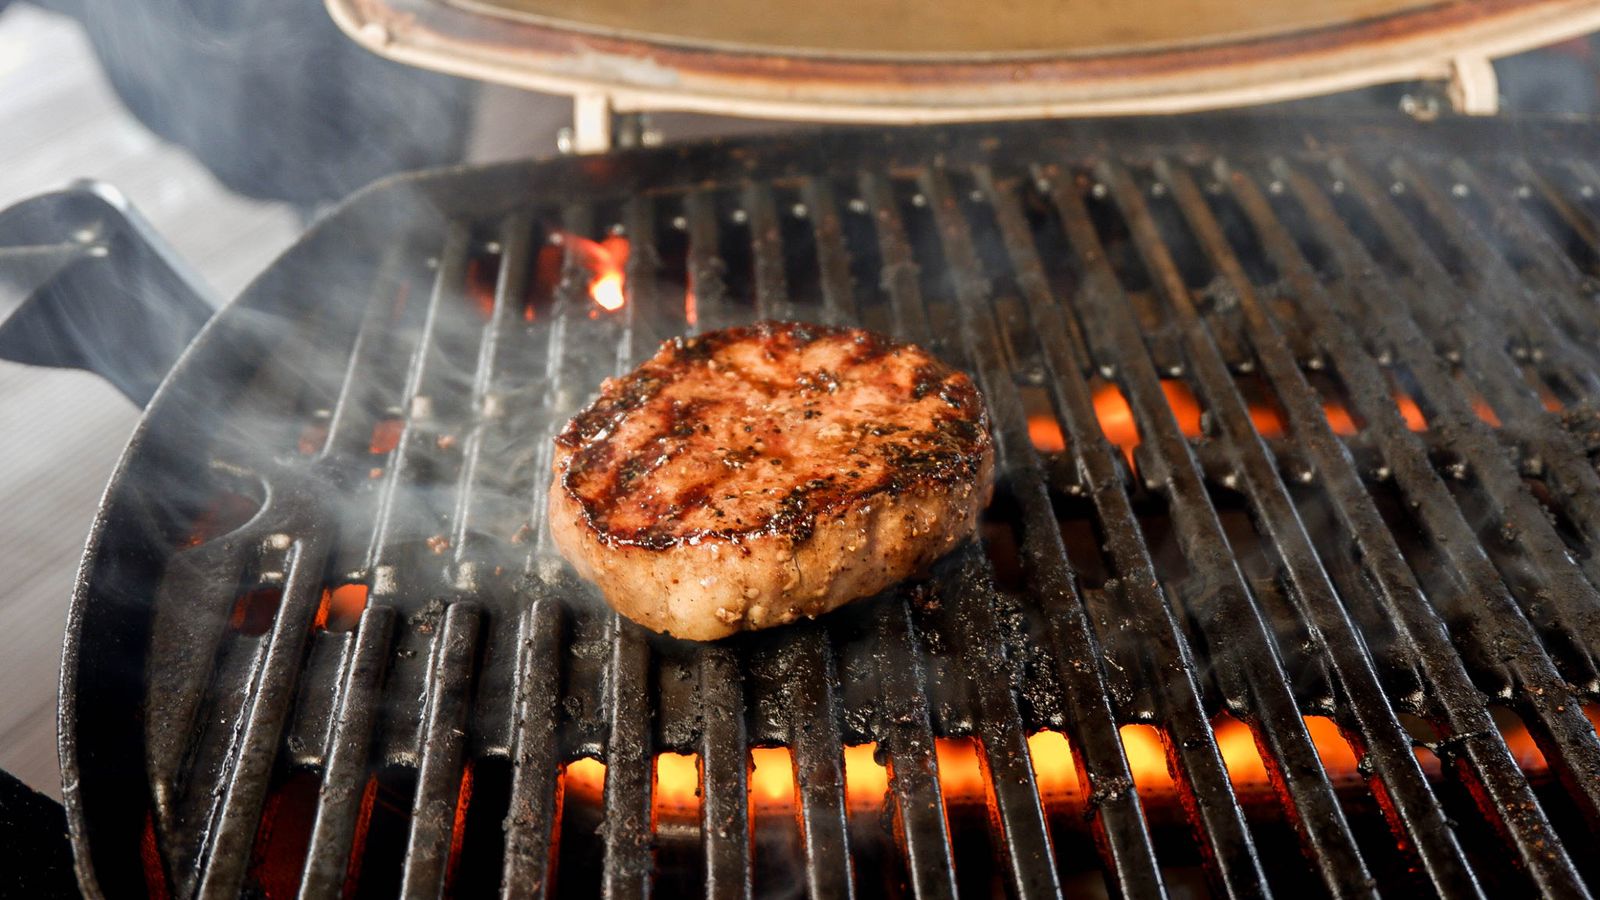 Steak wagyu yang matang akan muncul grill mark